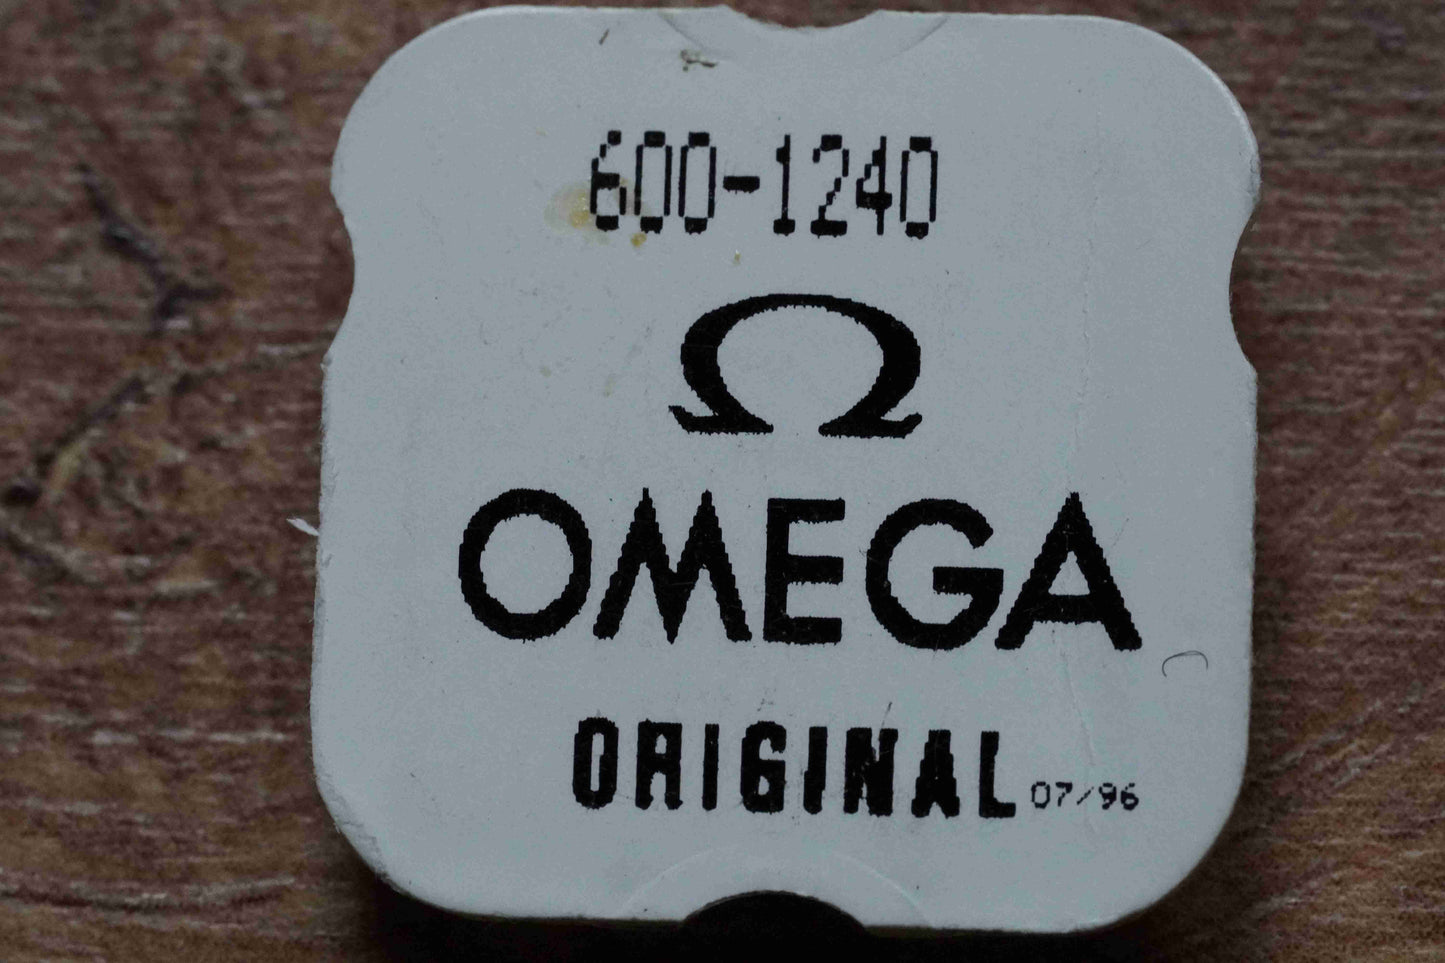 Omega cal 600 part 1240 Third wheel